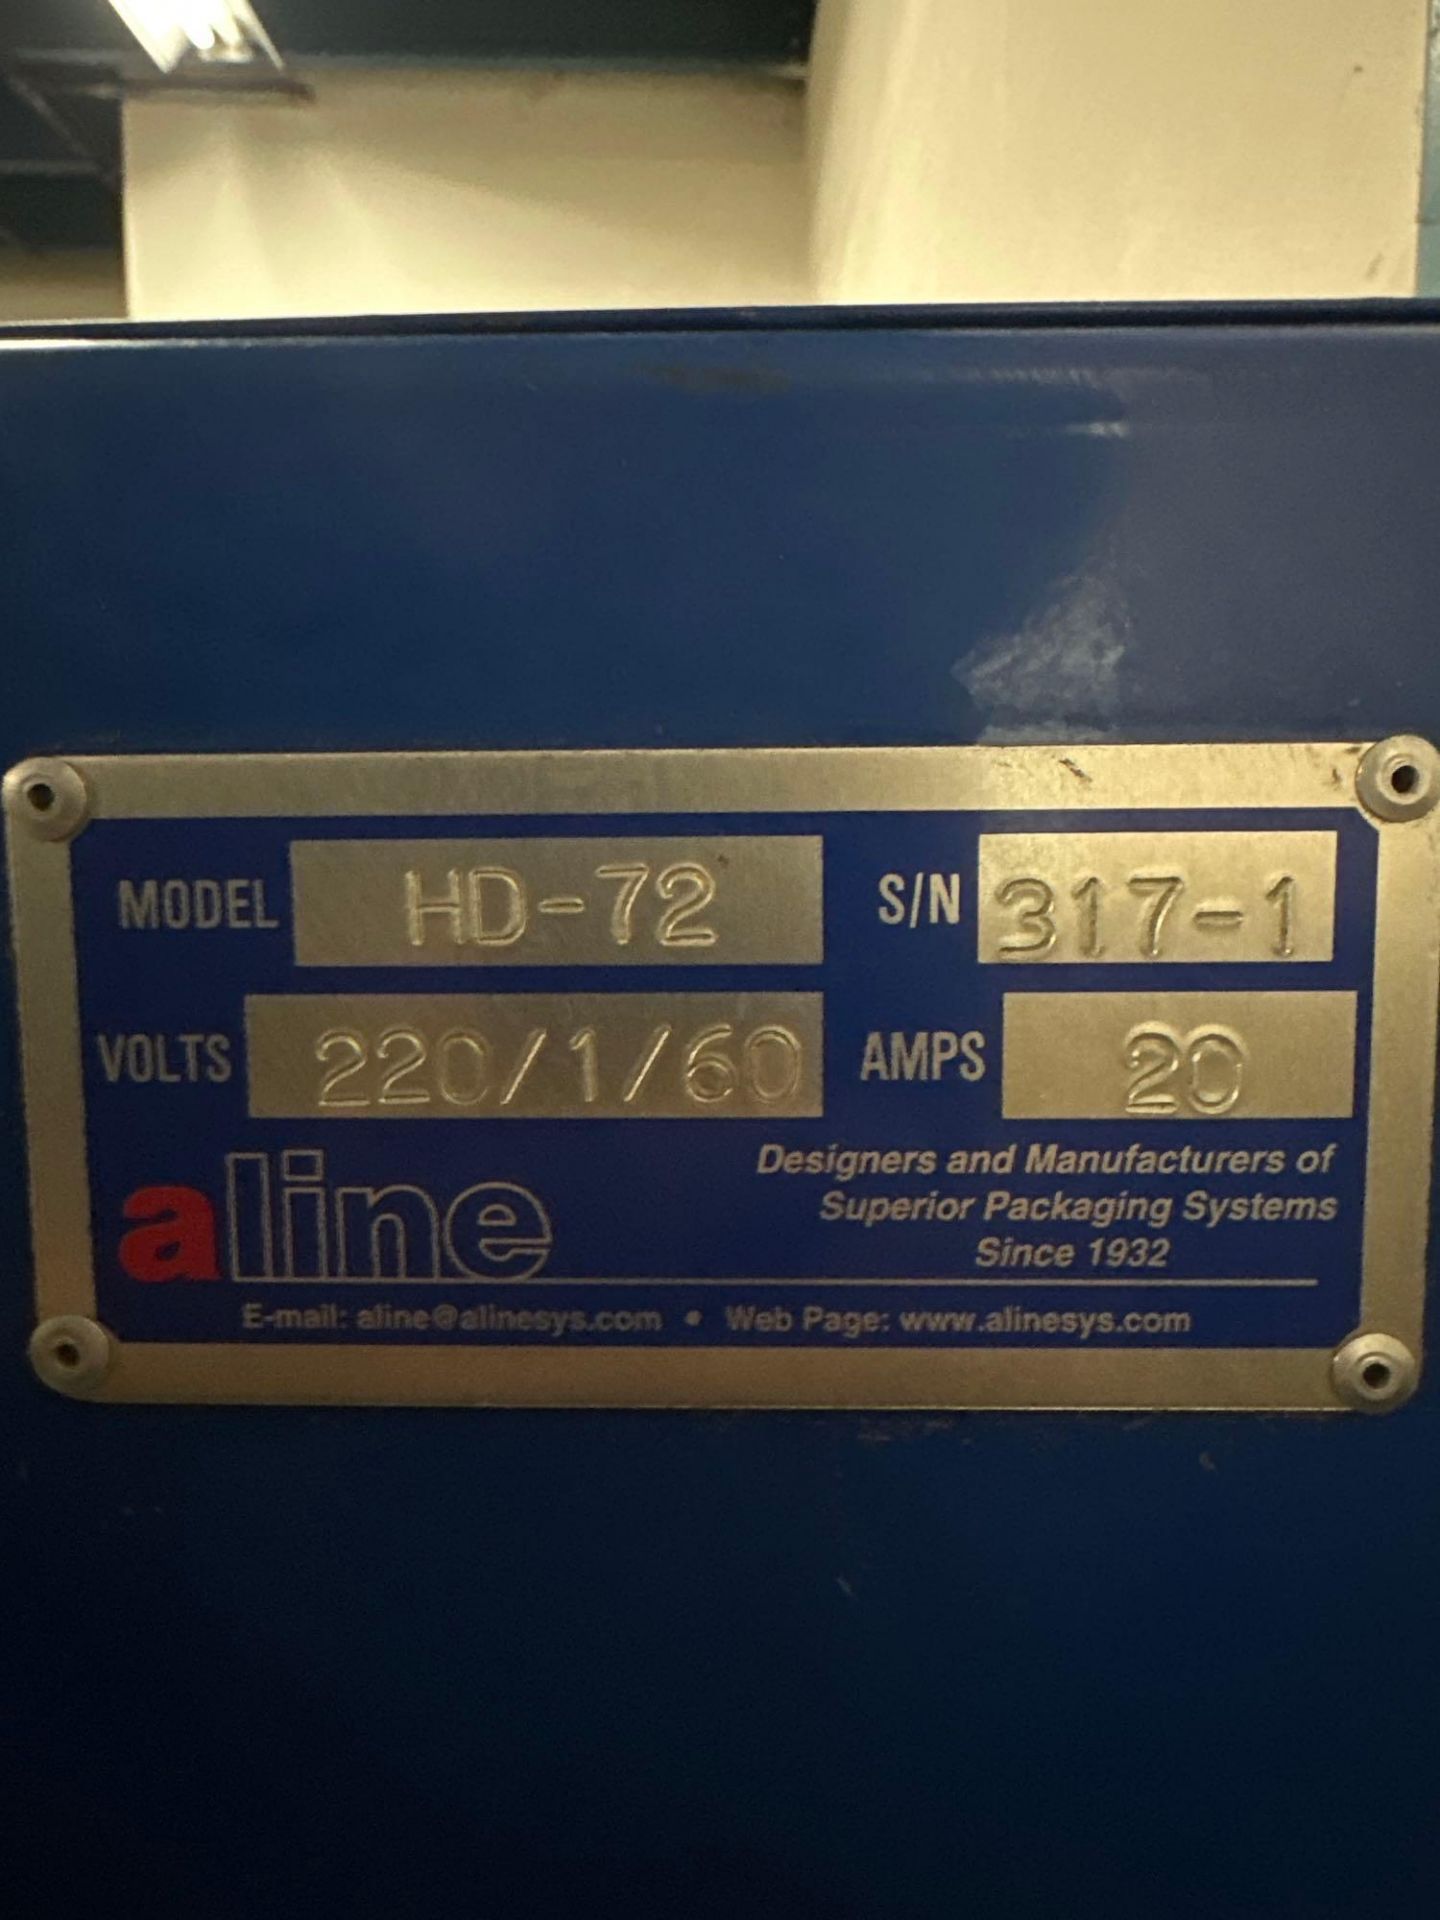 ALINE HD-72 Heat Sealer, 6', s/n 317-1 - Image 5 of 6